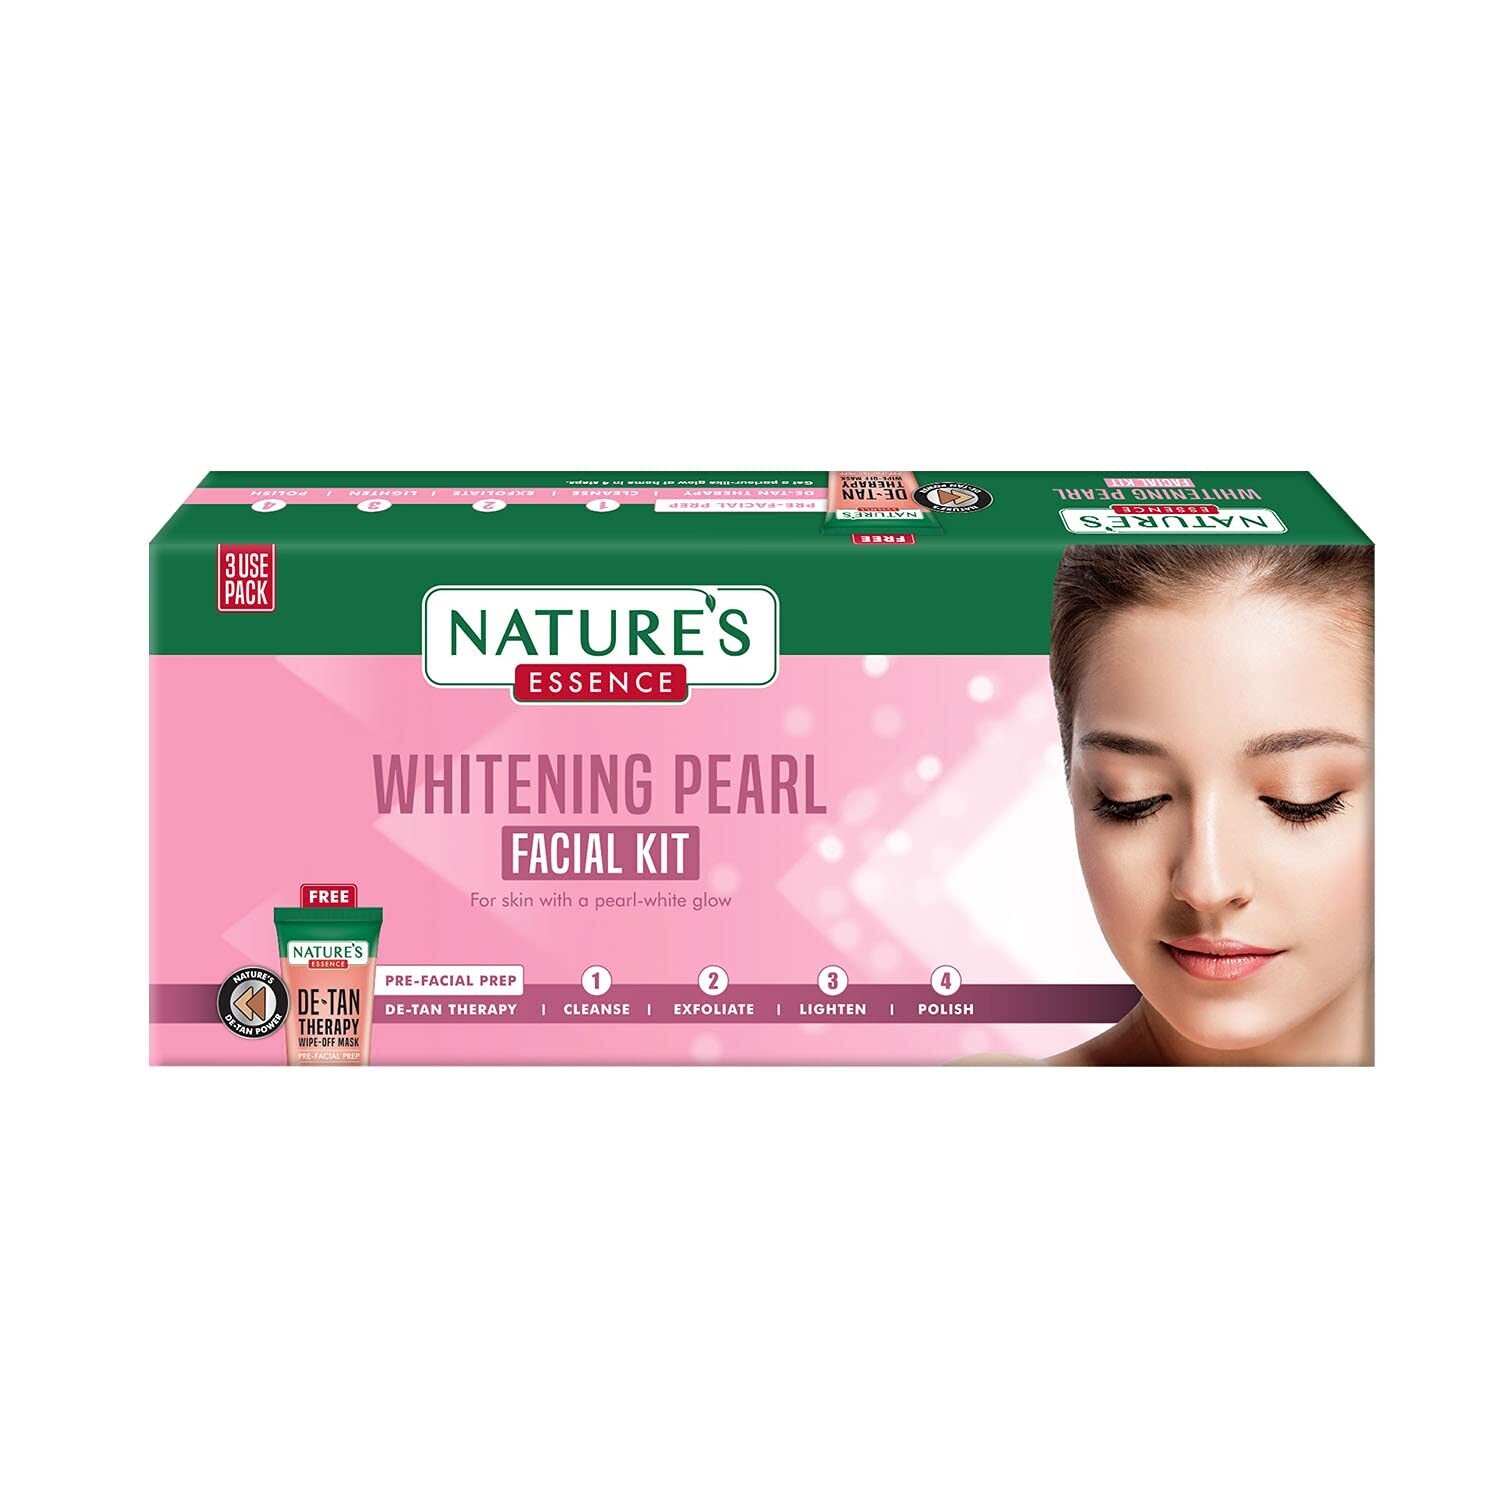 Nature's Essence Whitening Pearl Facial Kit